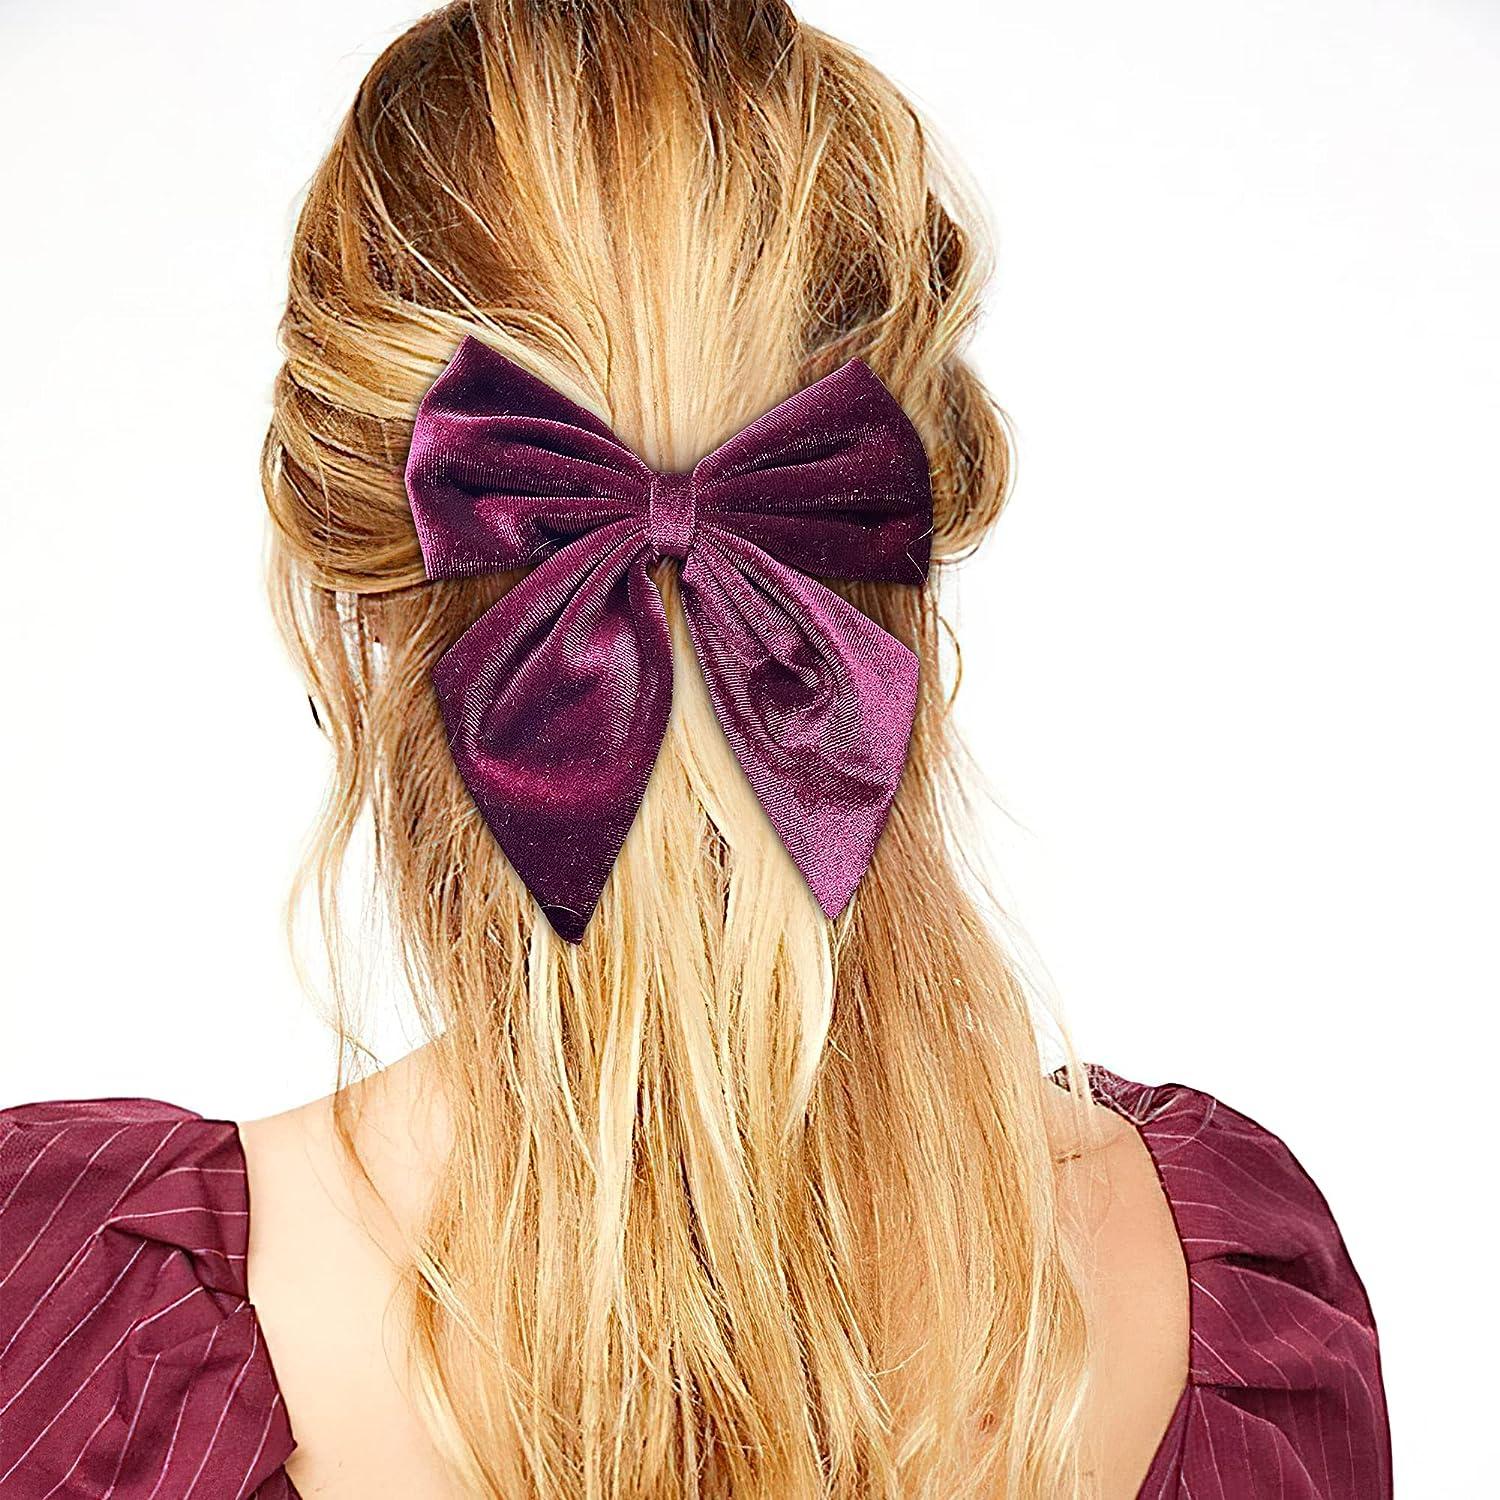 8 Pcs Hair Ribbons Hair Bows for Women Girls,Pink Hair Ribbons White Hair  Bows Alligator Clips For Hair Design (Pink,Beige,Black,Blue)